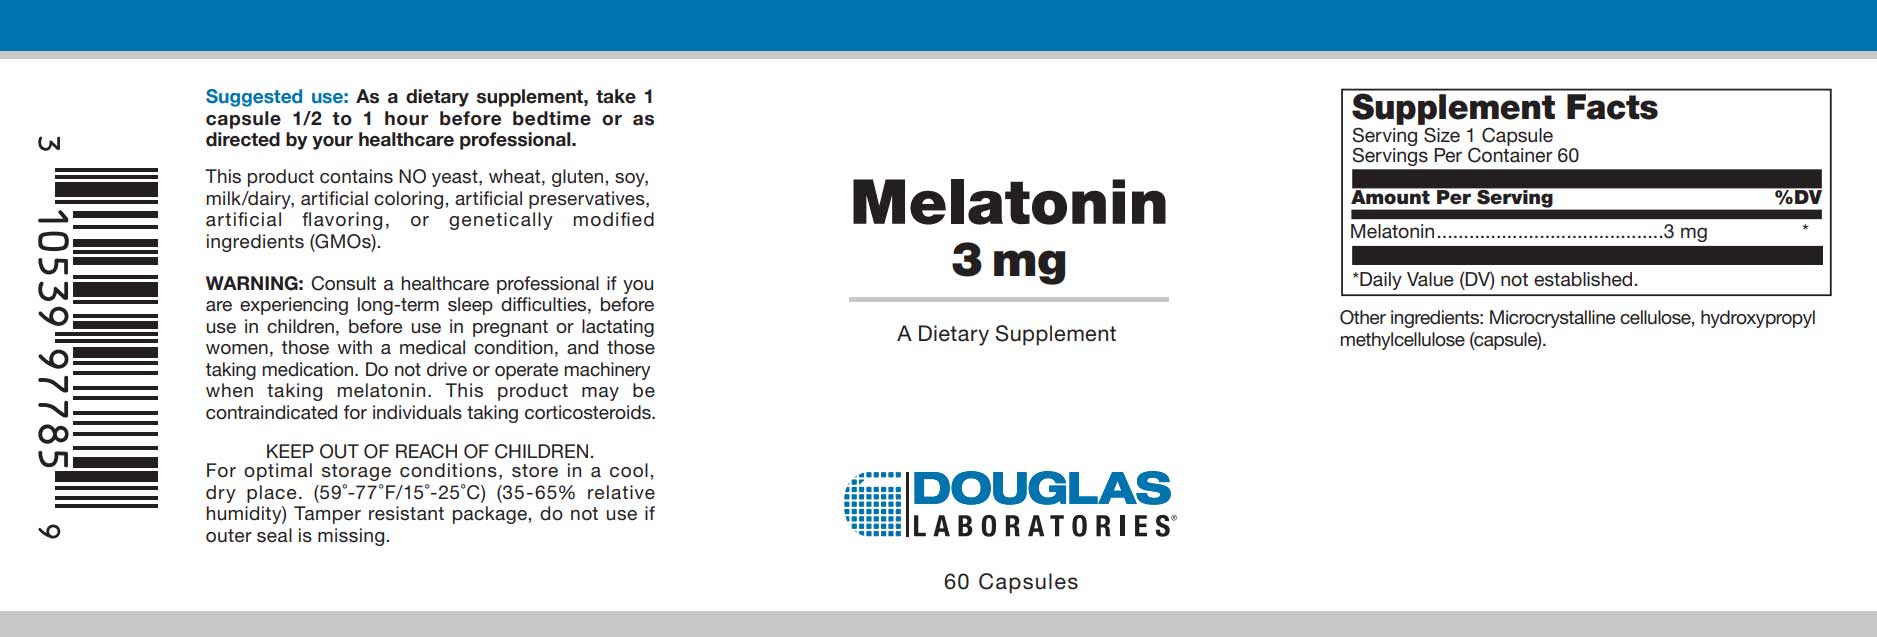 Douglas Laboratories Melatonin (3mg) Label